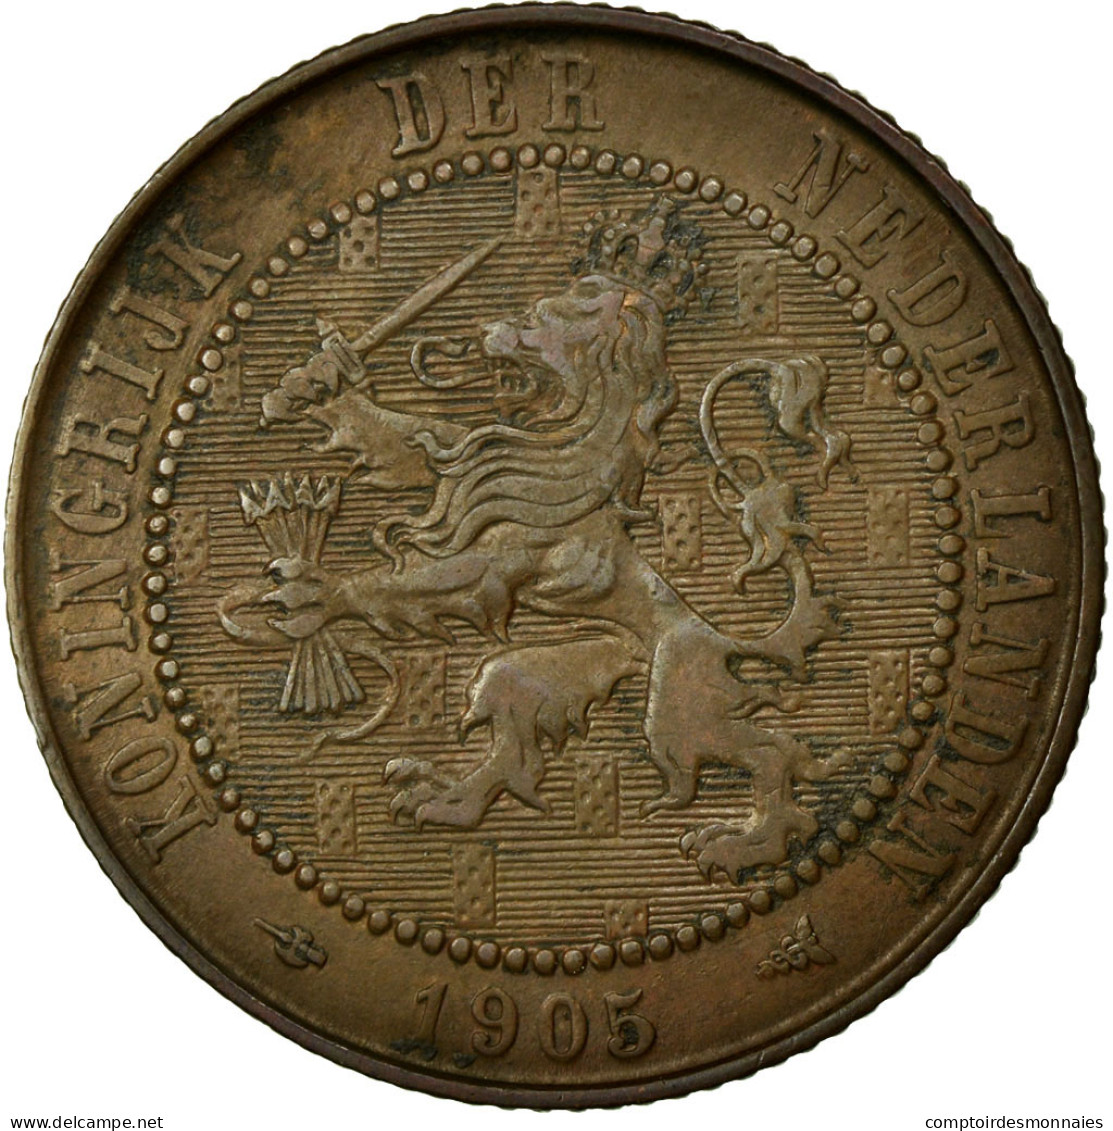 Monnaie, Pays-Bas, Wilhelmina I, 2-1/2 Cent, 1905, TTB, Bronze, KM:134 - 2.5 Centavos